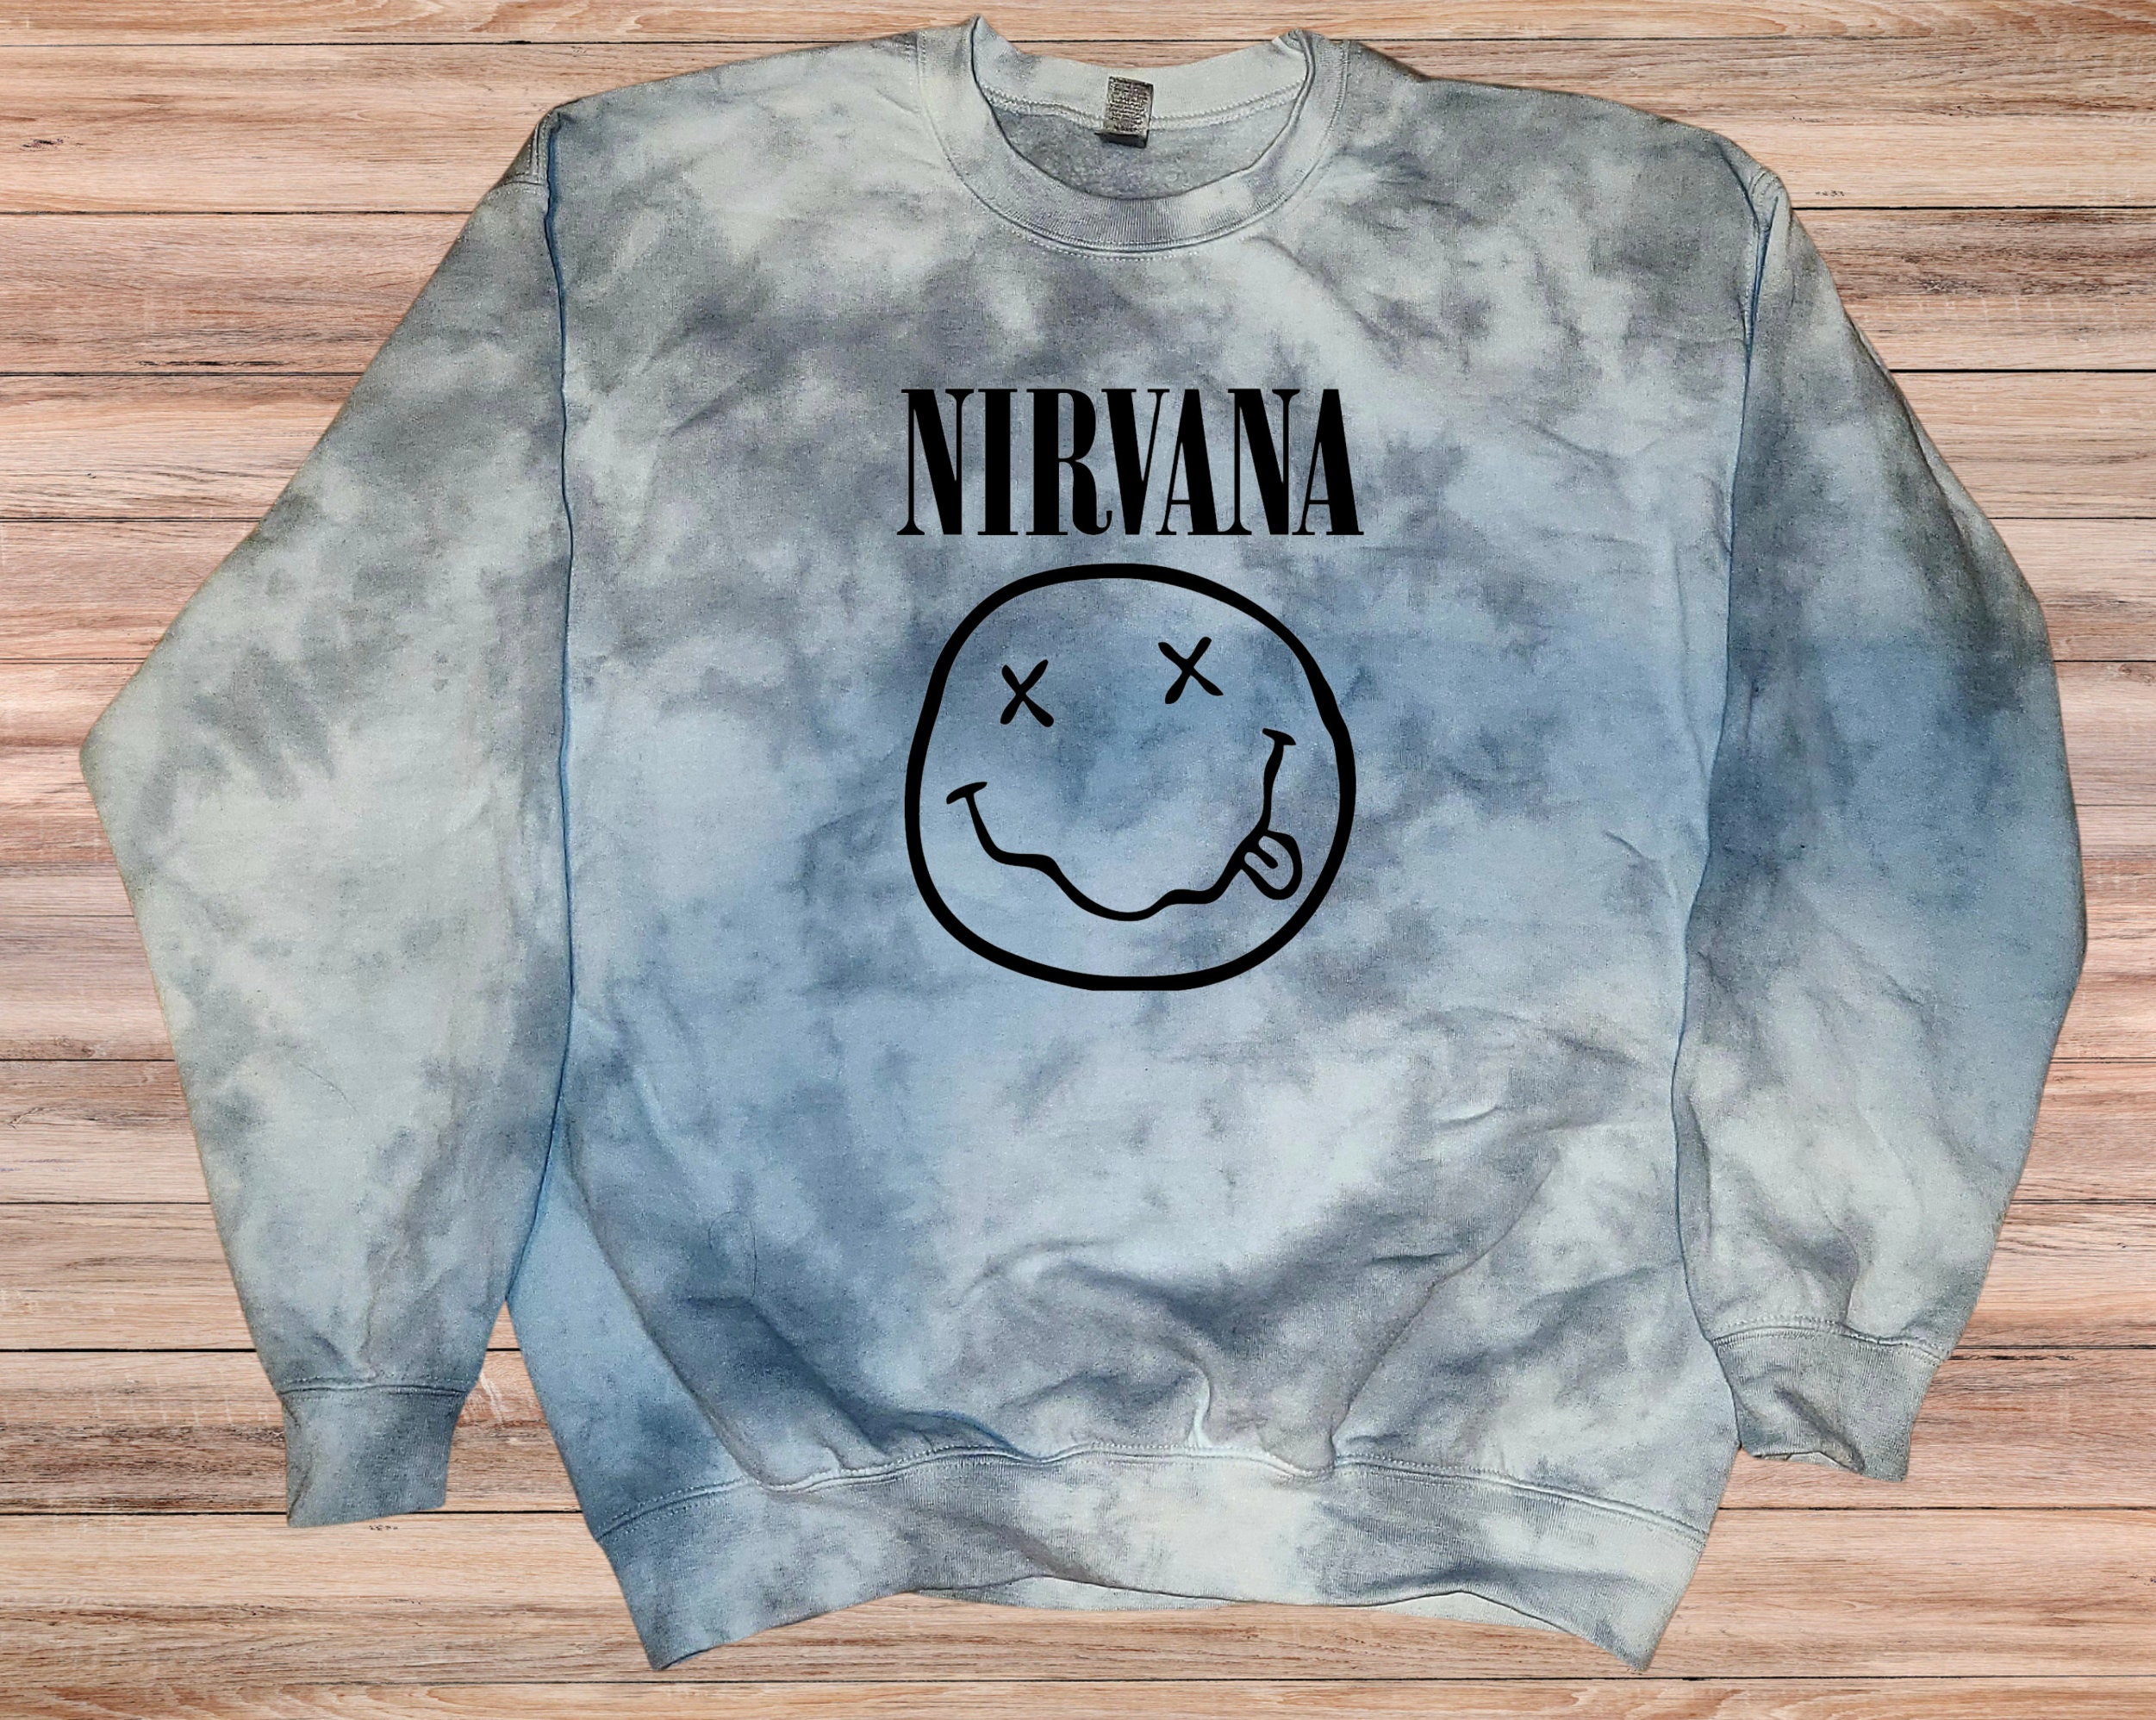 Bleach Nirvana Youth T-Shirt by Rasyid Indra - Pixels